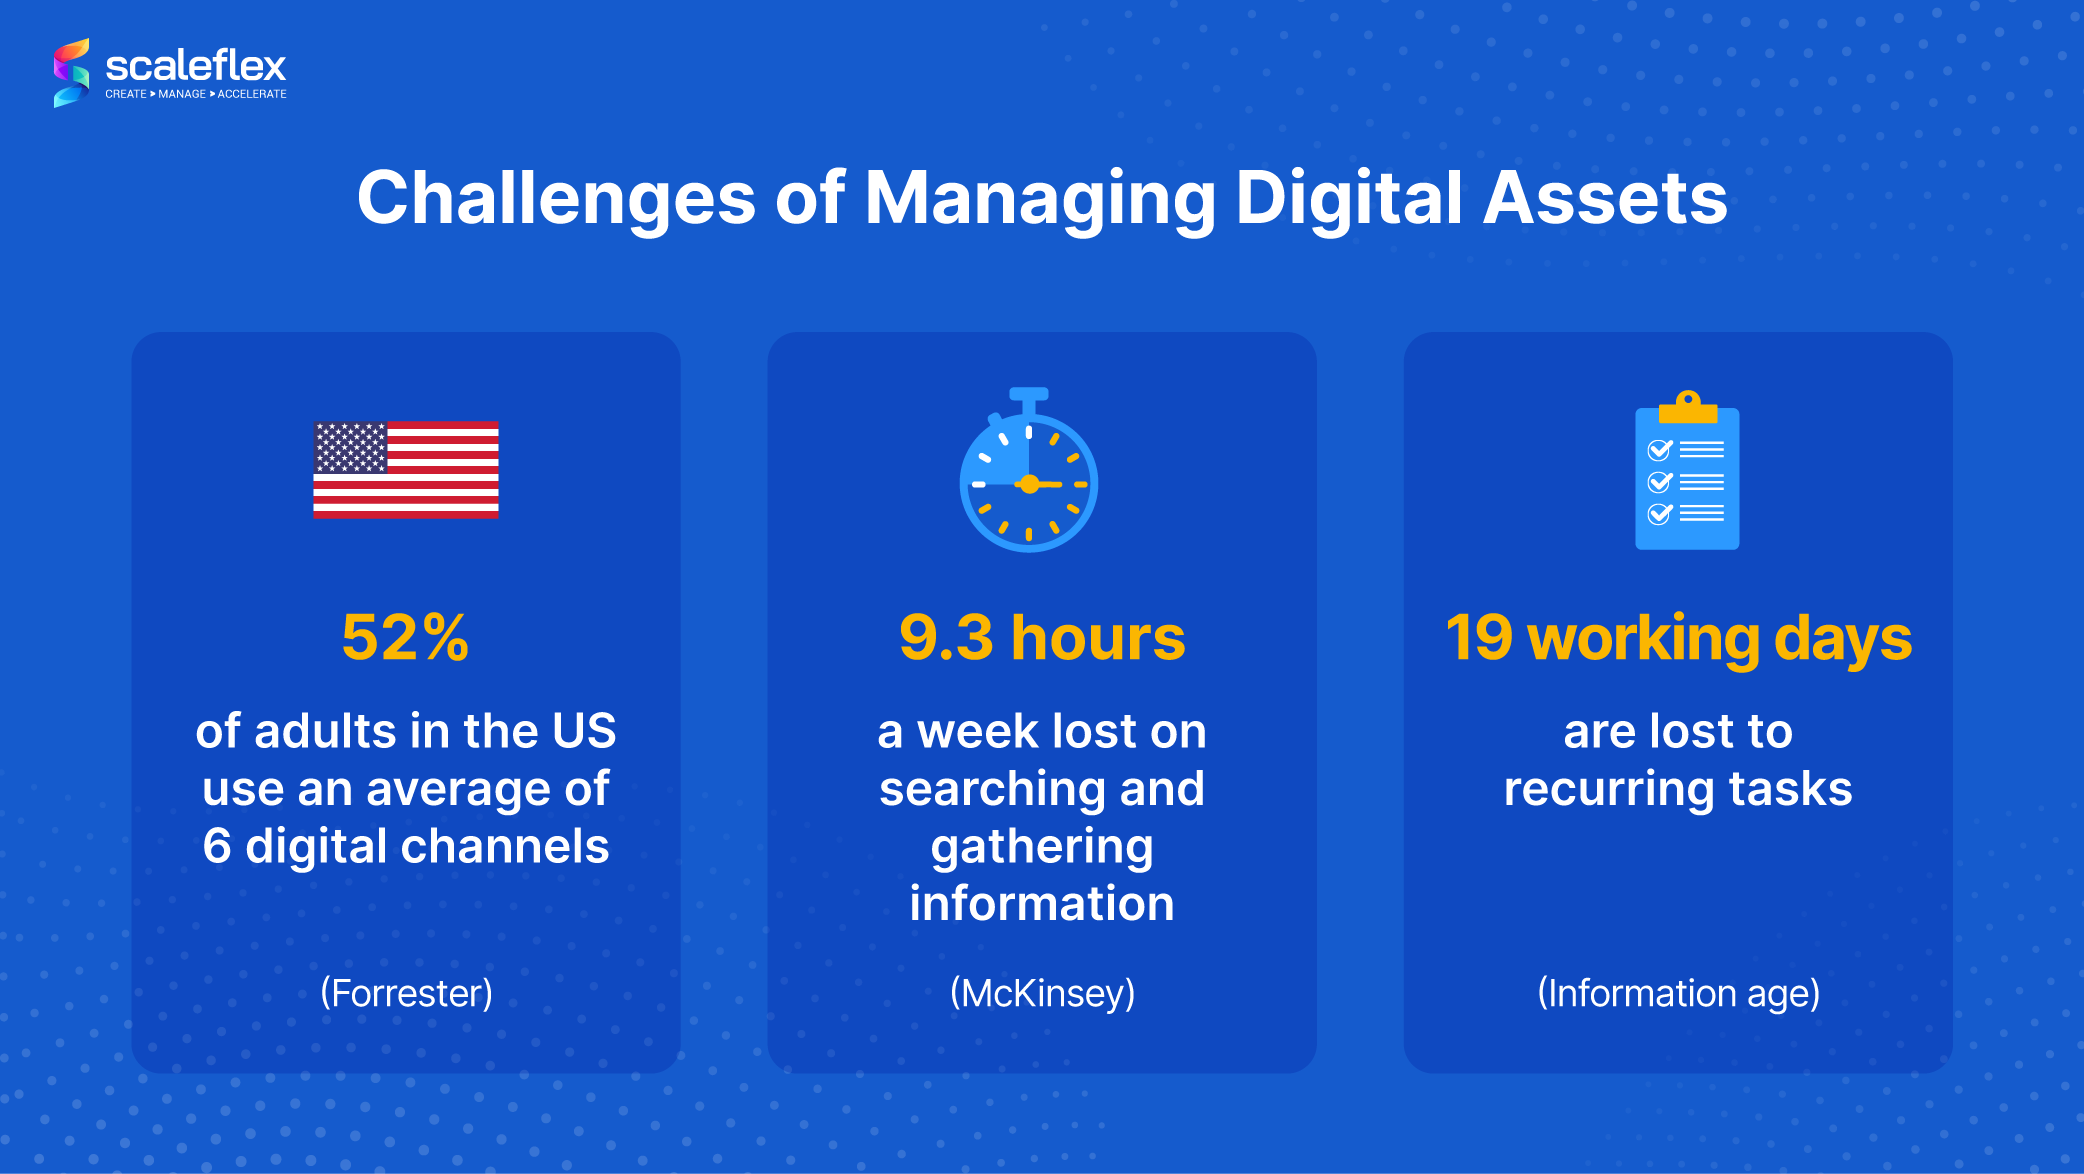 statistics on the challenges of managing digital assets